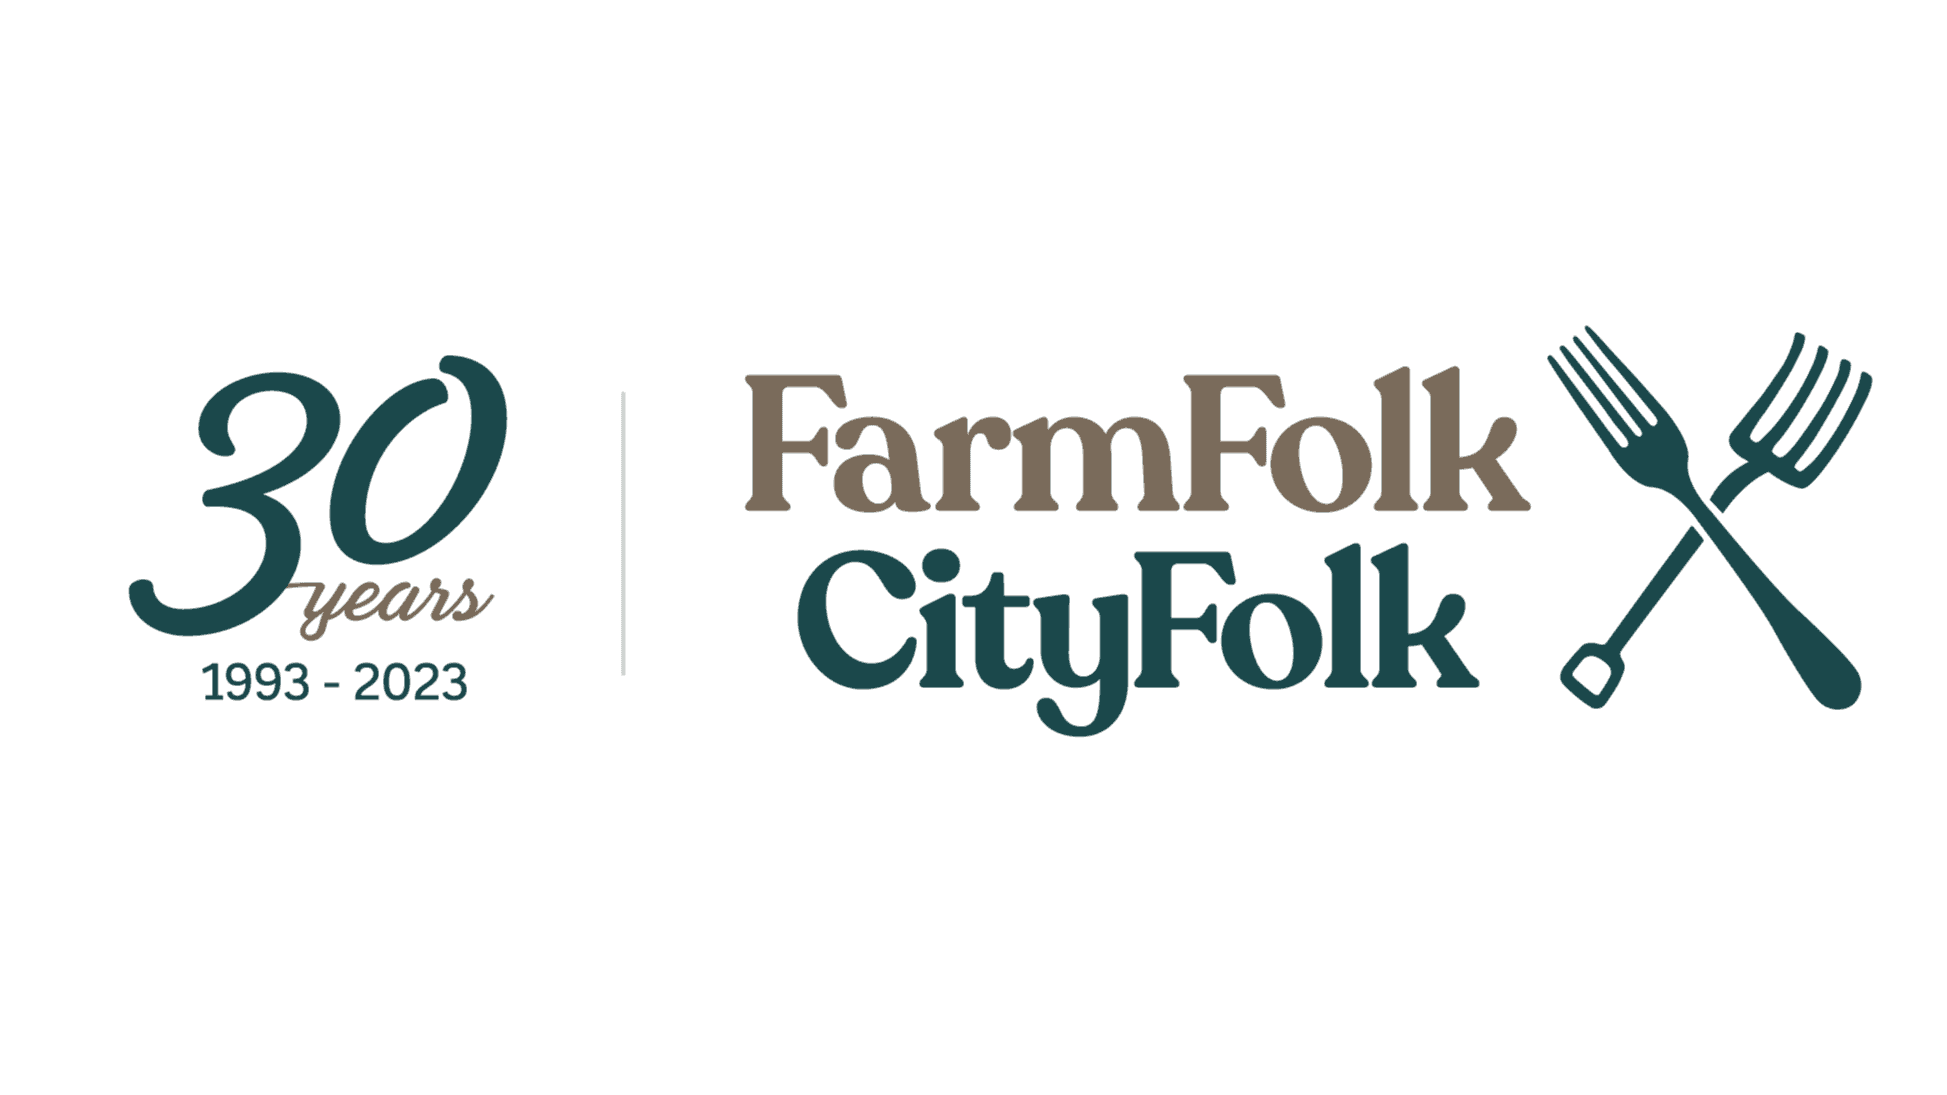 FarmFolk CityFolk's Logo